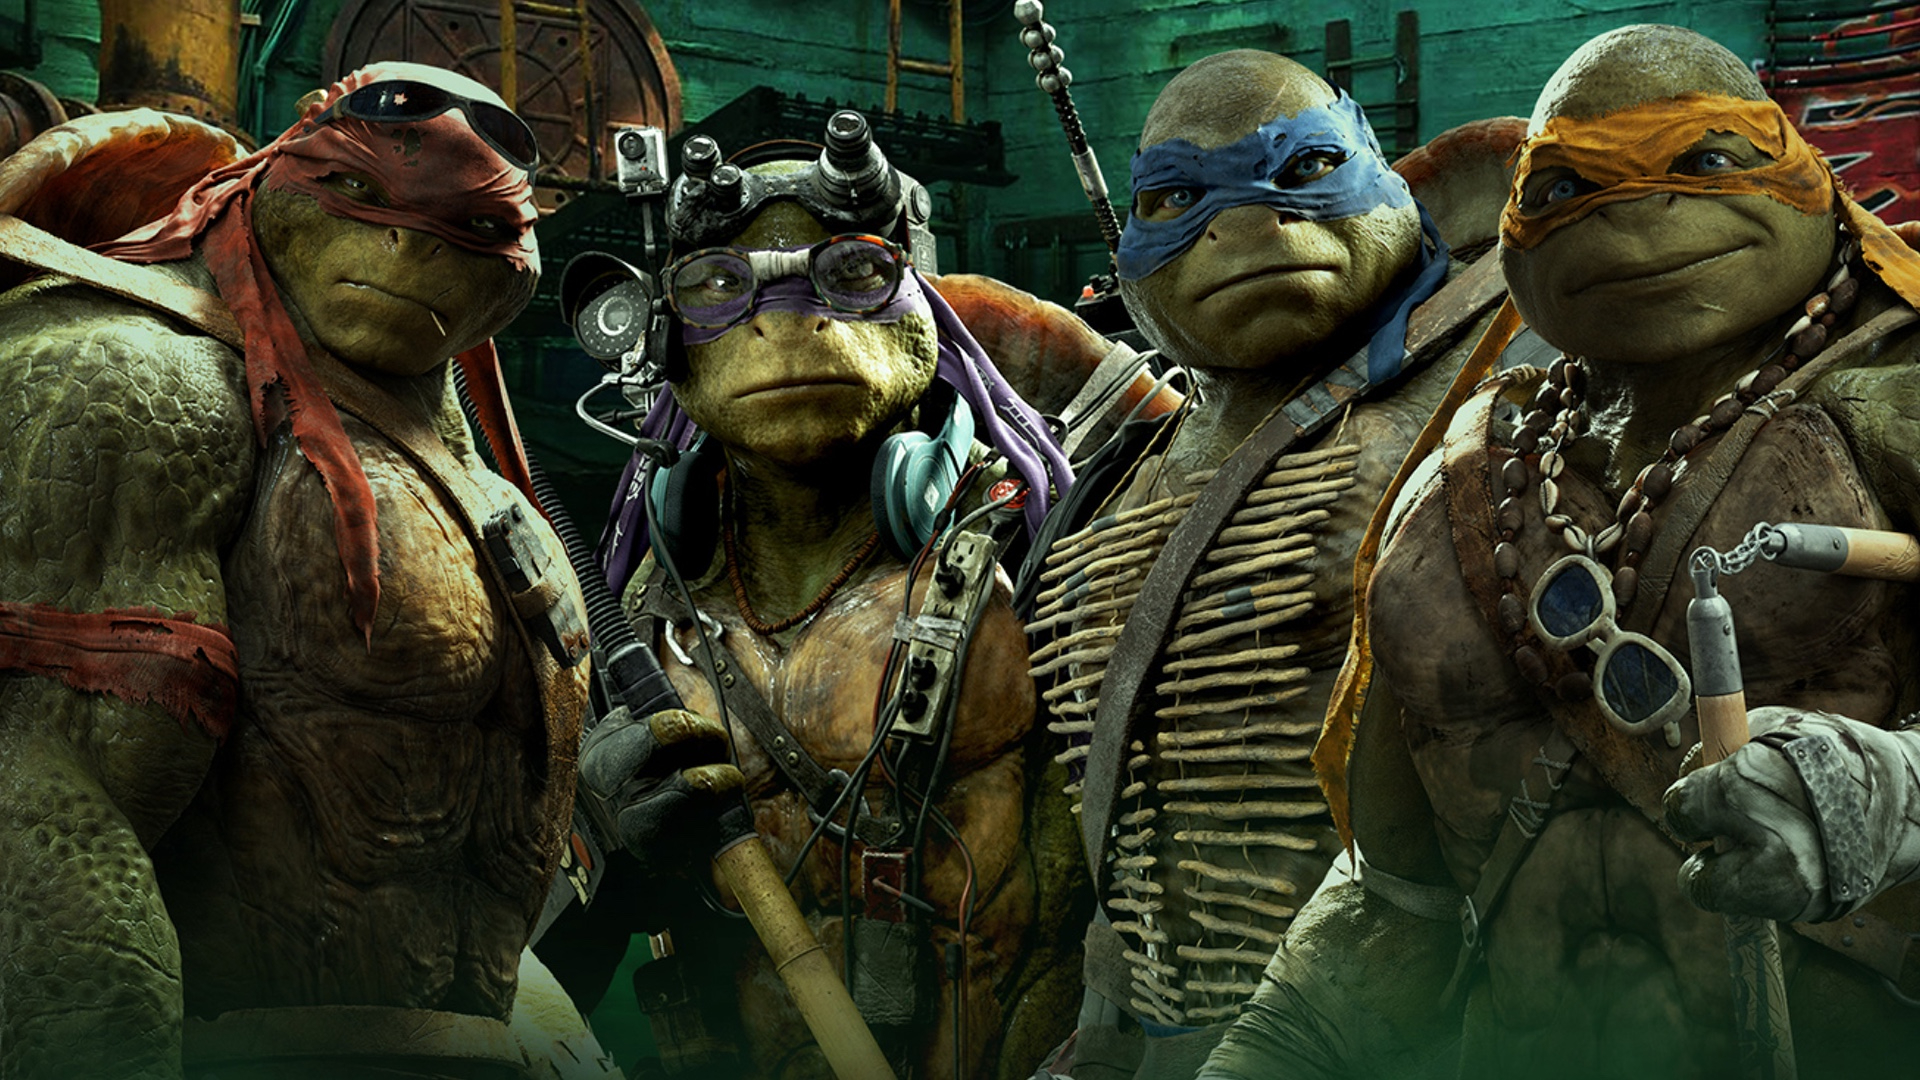 Get Hyped for The Next Teenage Mutant Ninja Turtles Movie